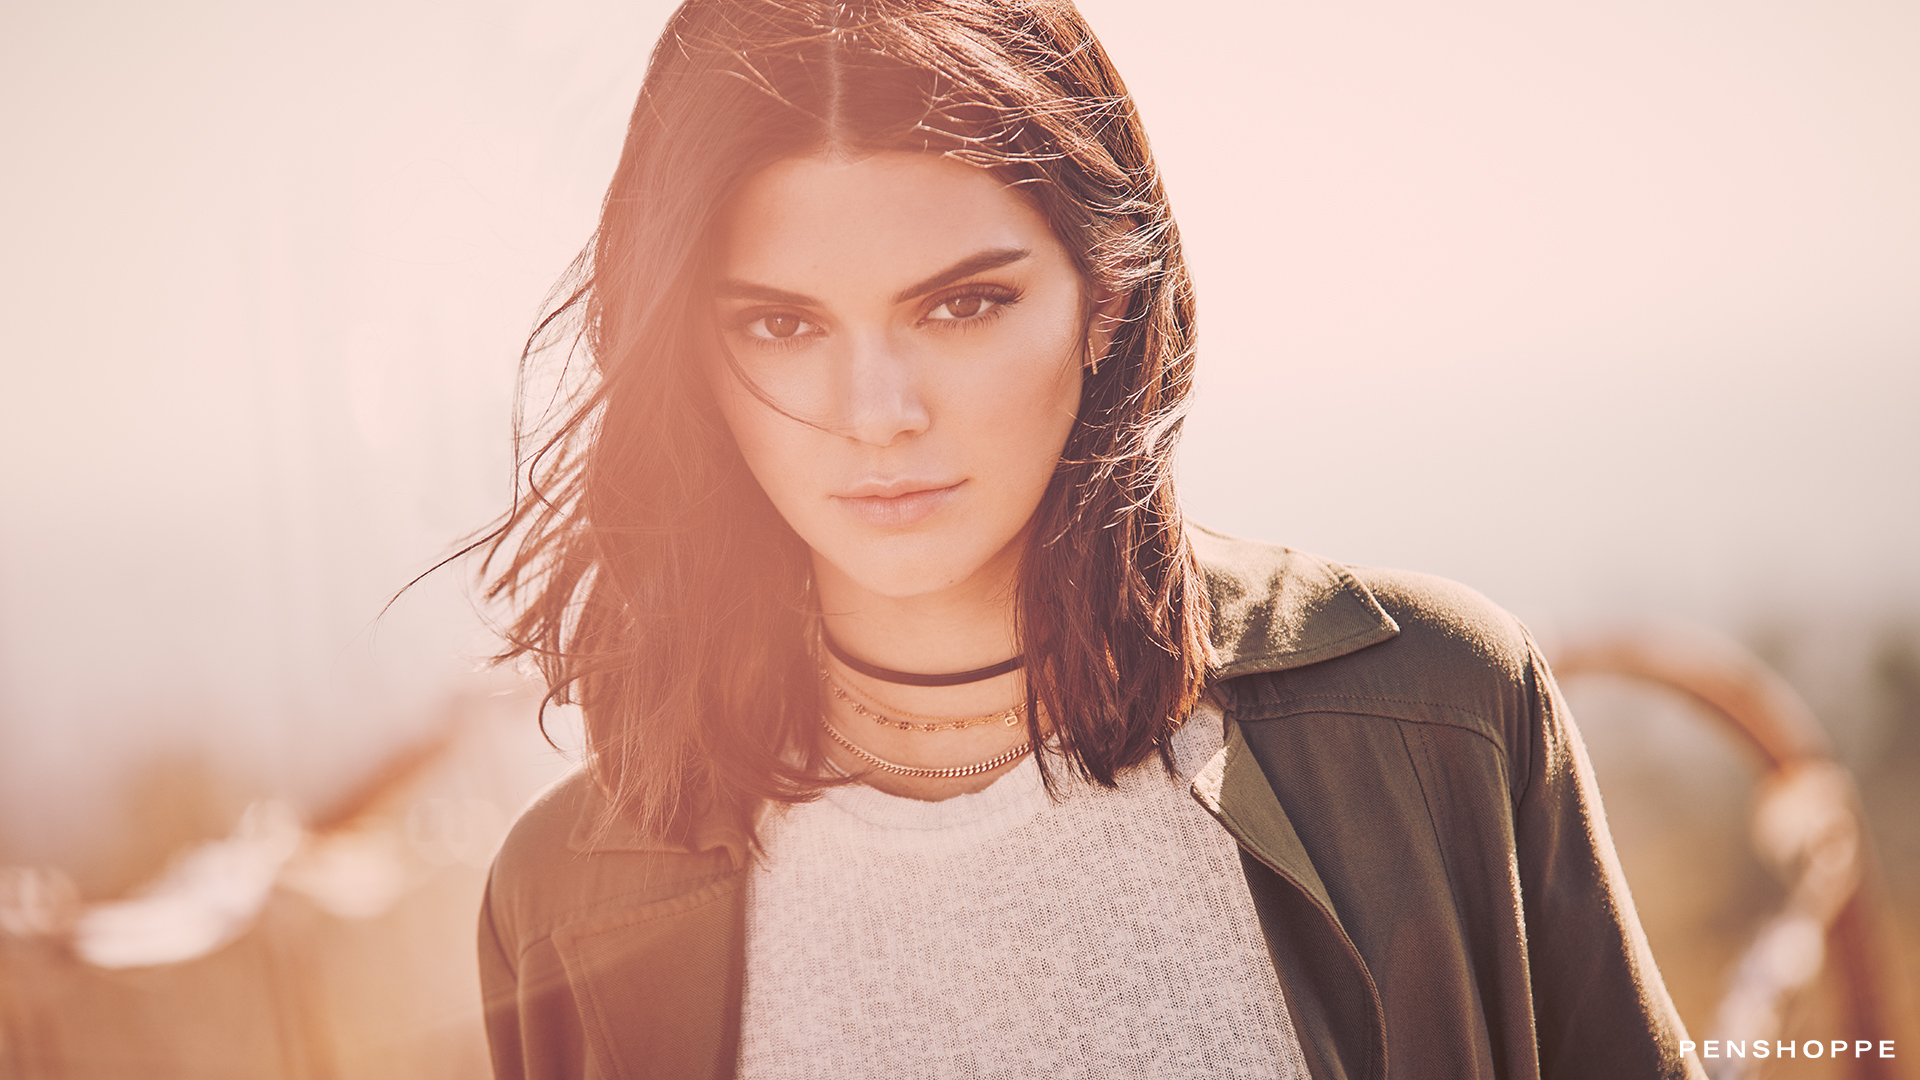 Kendall Jenner Model Wallpapers